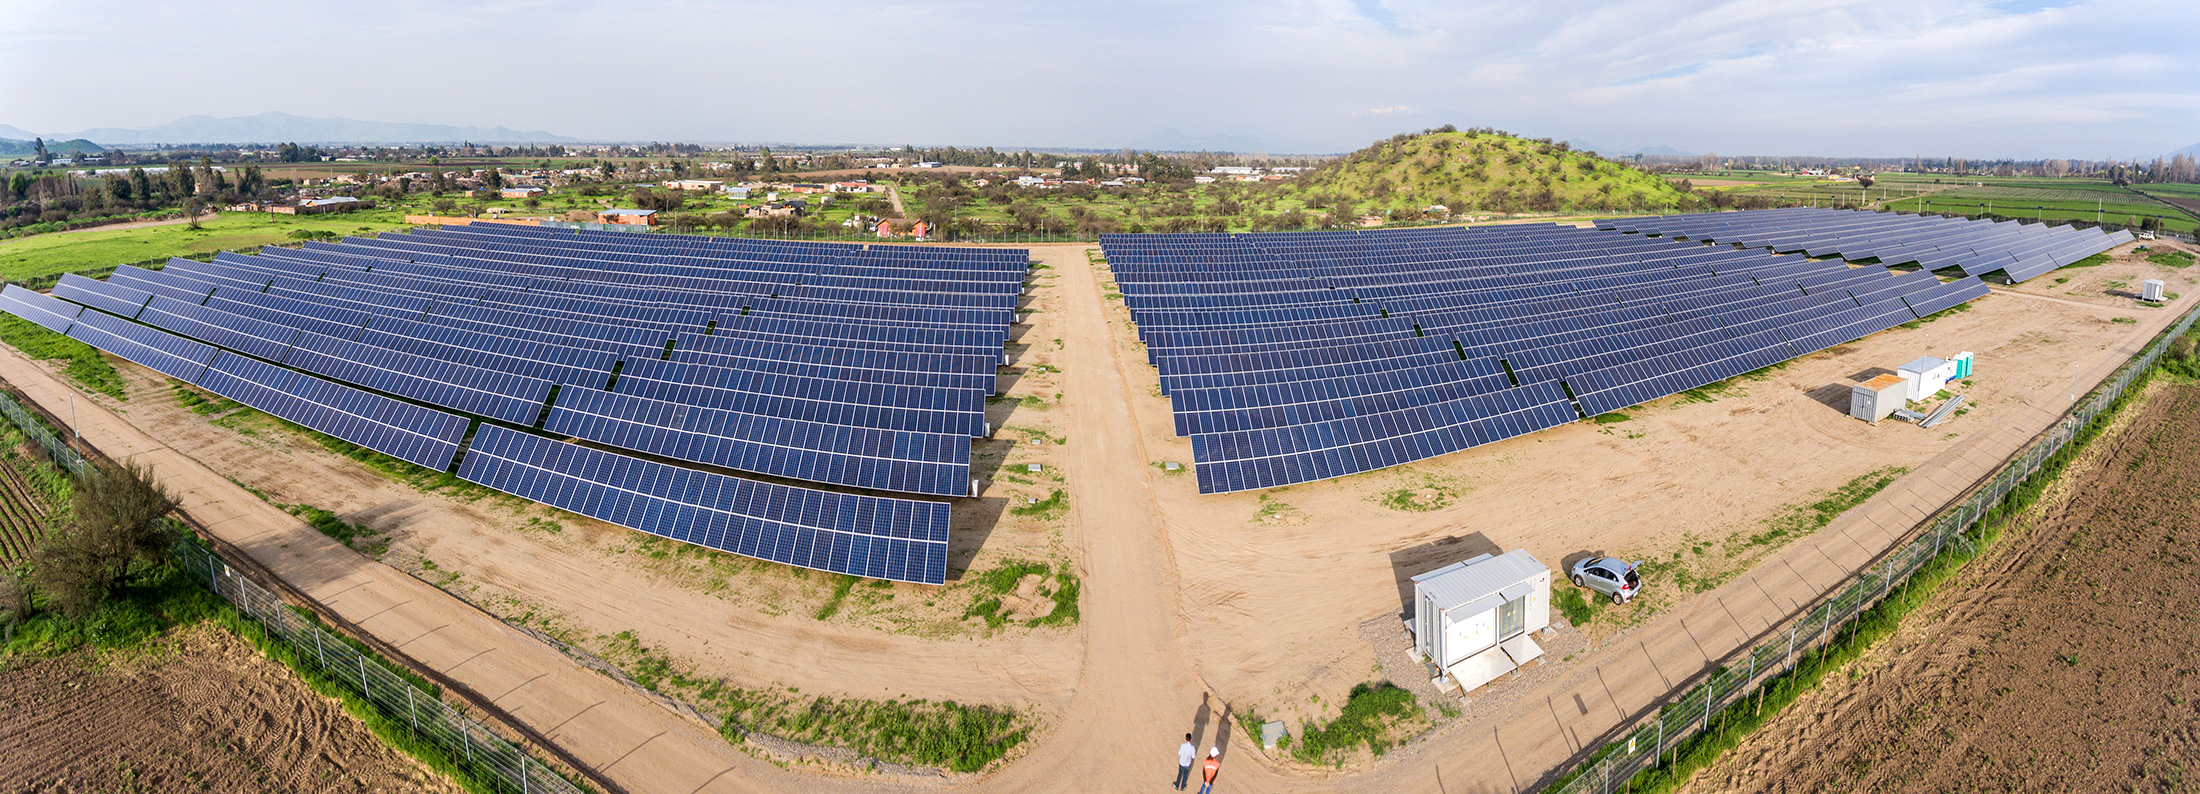 Ground-mounted solar power plant CVE Chile